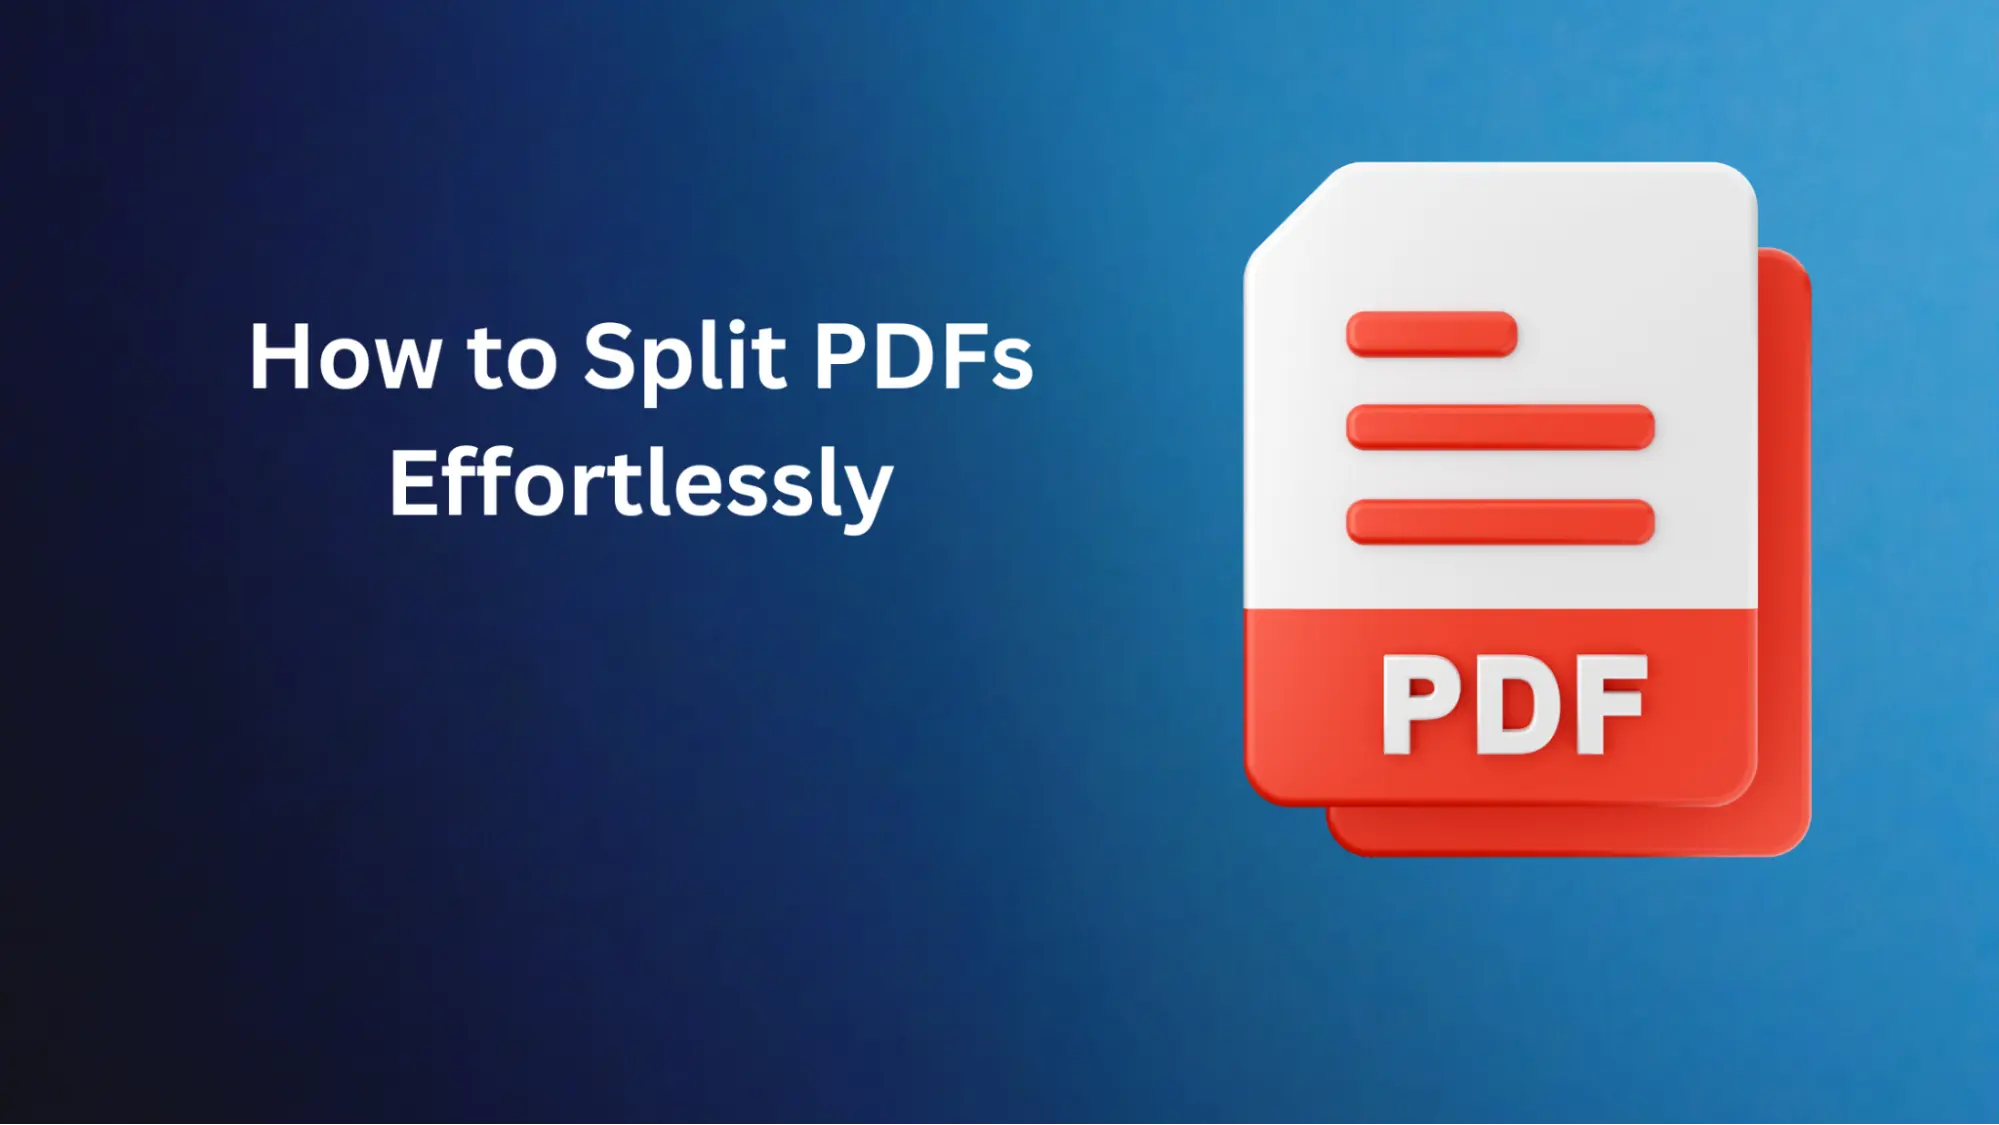 How to split PDFs effortlessly